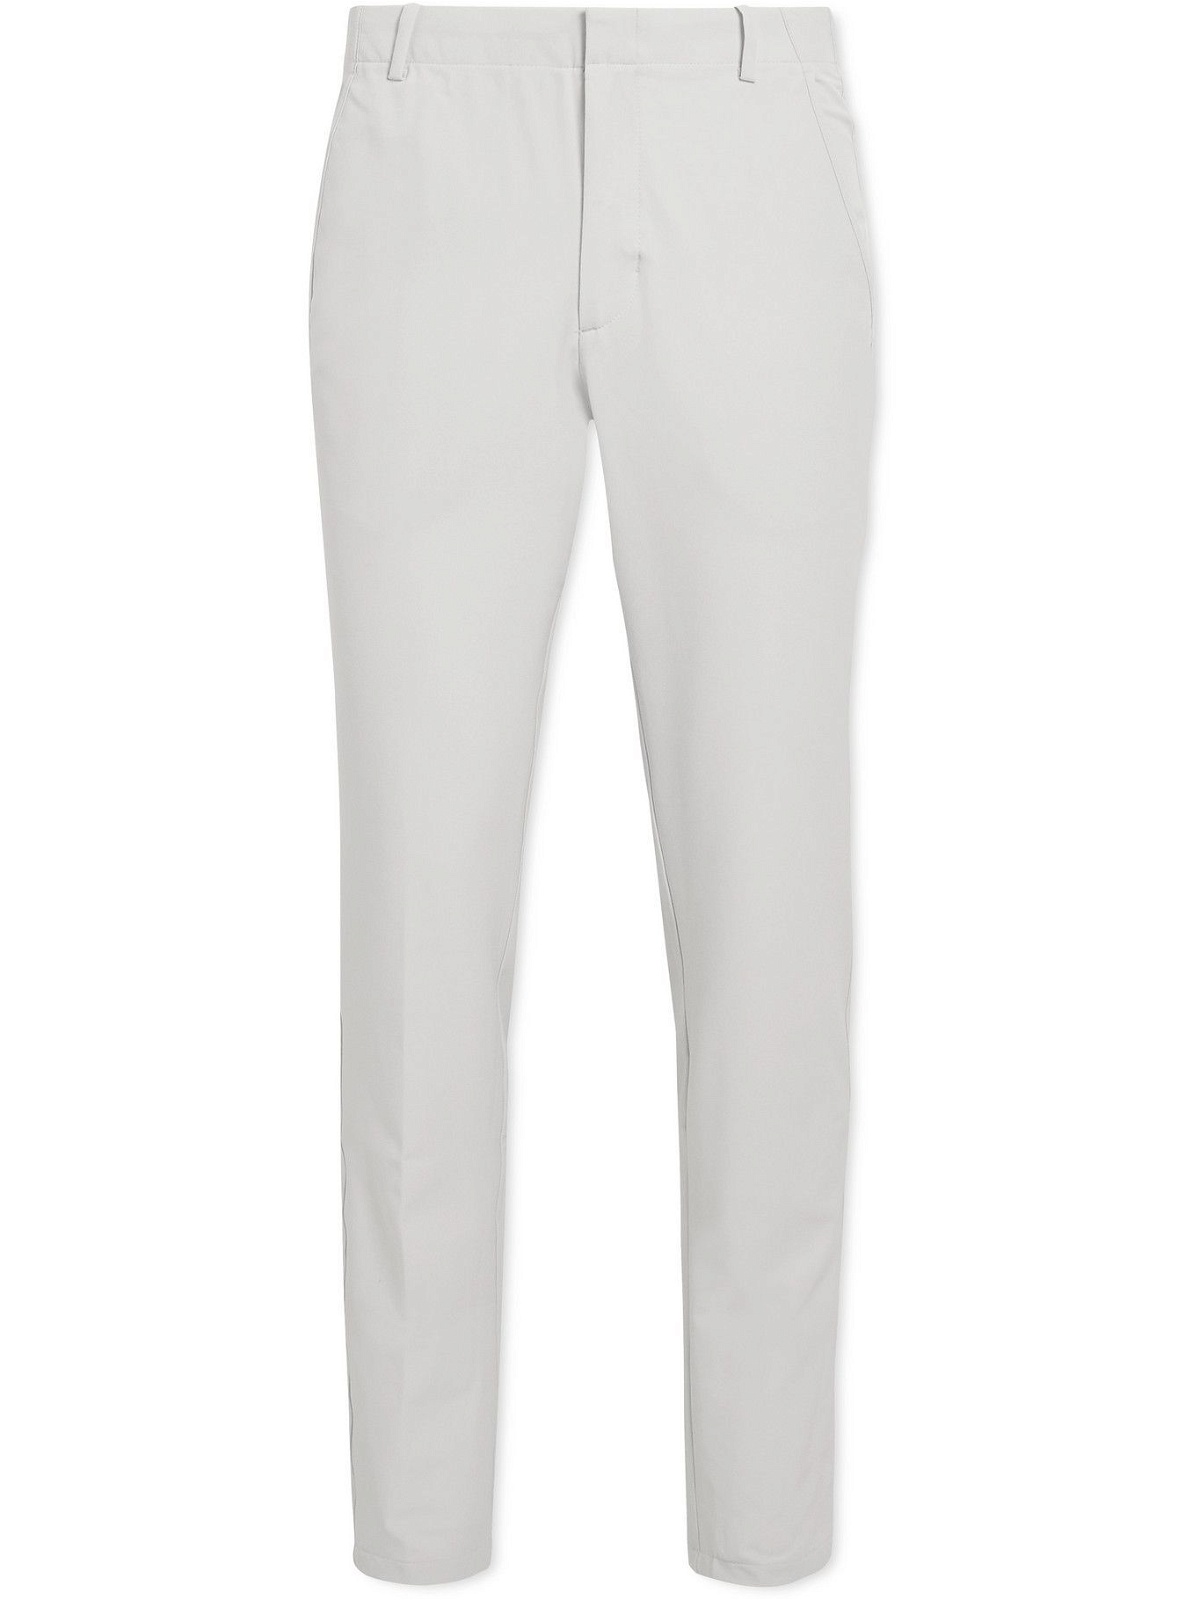 Nike Mens Pants CottonPolyester Blend Flex Slim Fit 6Pocket Golf Pants  CI9765 White 38X32  Amazonin Clothing  Accessories